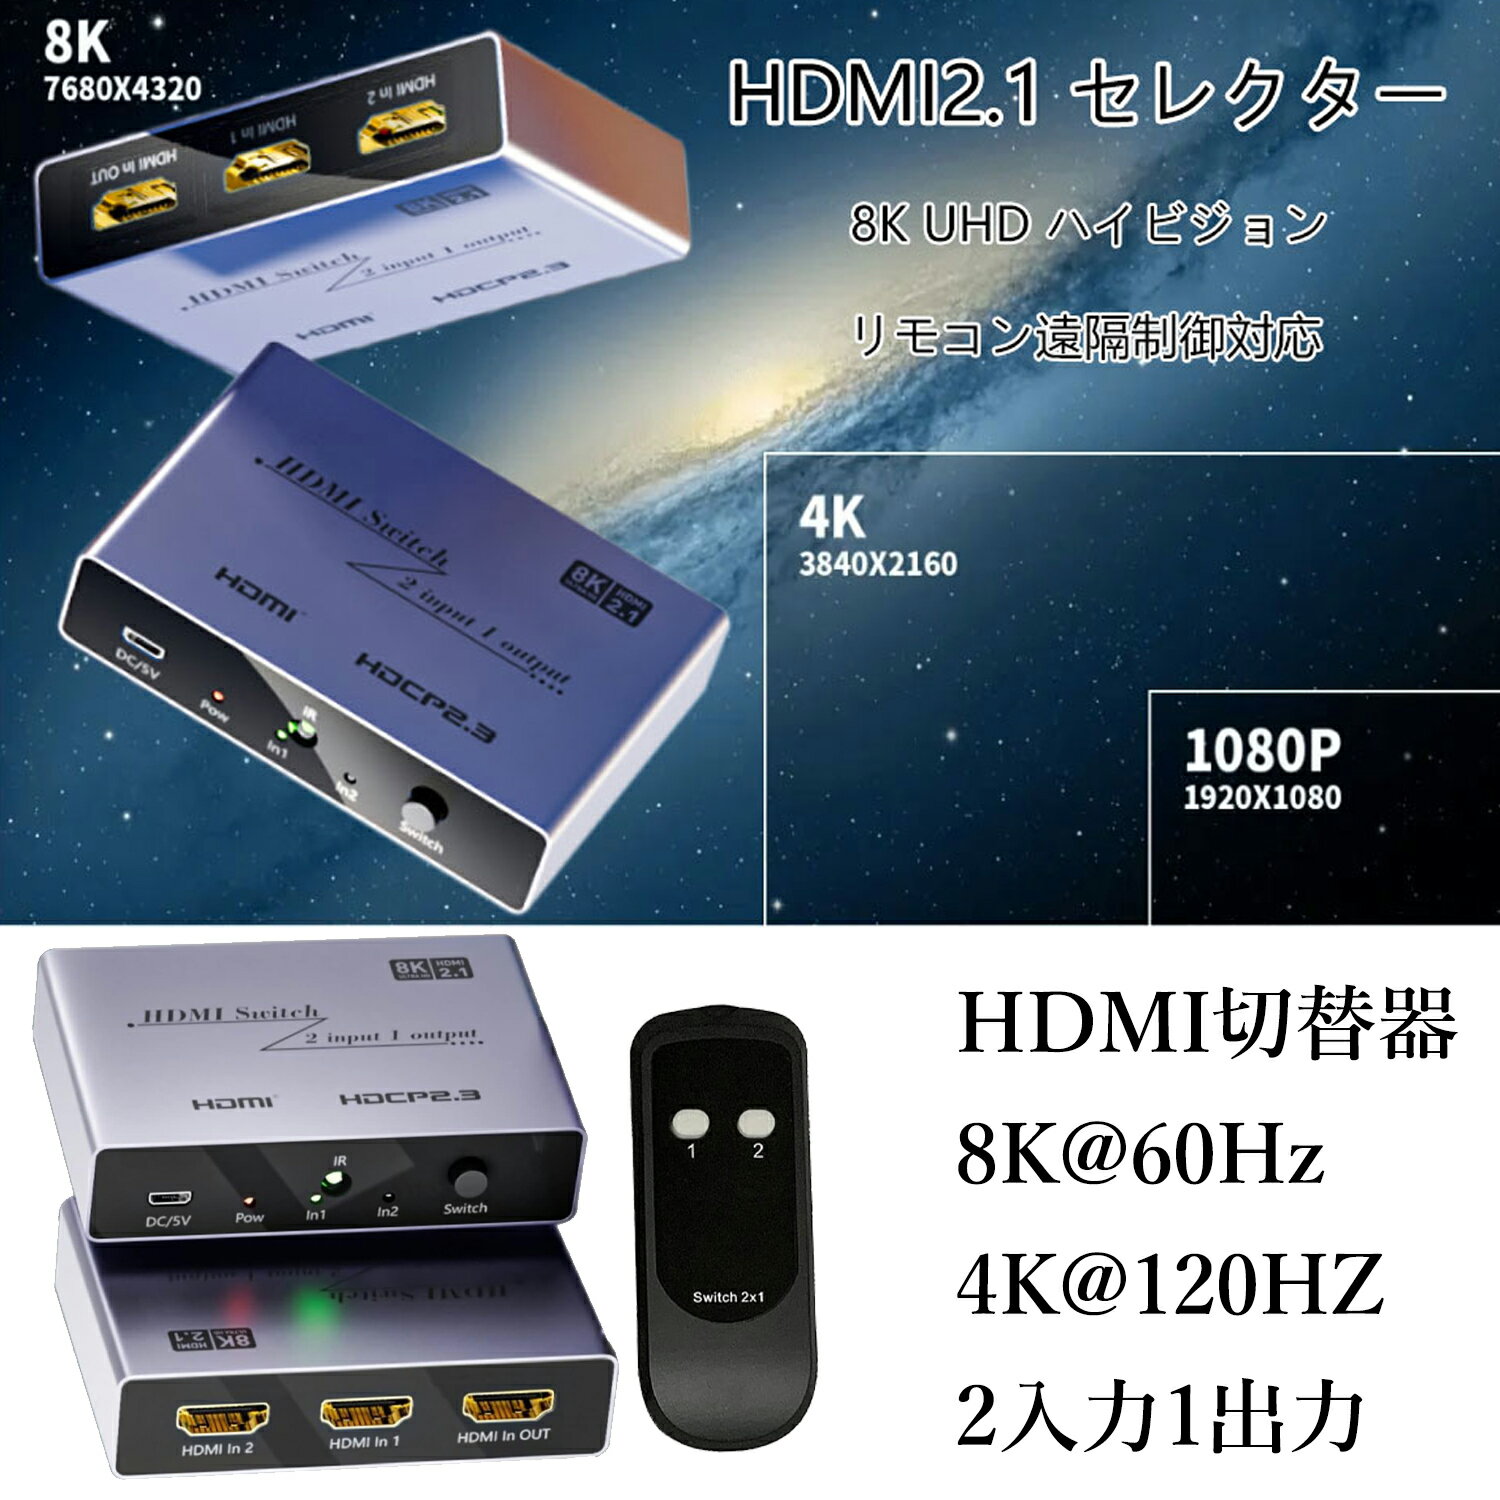 【スーパーSALE限定5倍P付】ES-Tune 8K HDMI切替器 8K@60Hz 4K@120HZ 2入力1出力 リモコン対応 HDMI2.1 HDMIスイッチ 手動切替 コンピューター/Switch/PS4/PS5/HDTV/プロジェクター/モニターに適応リモコン付 生放送 ライブ配信 日本語取扱説明書付